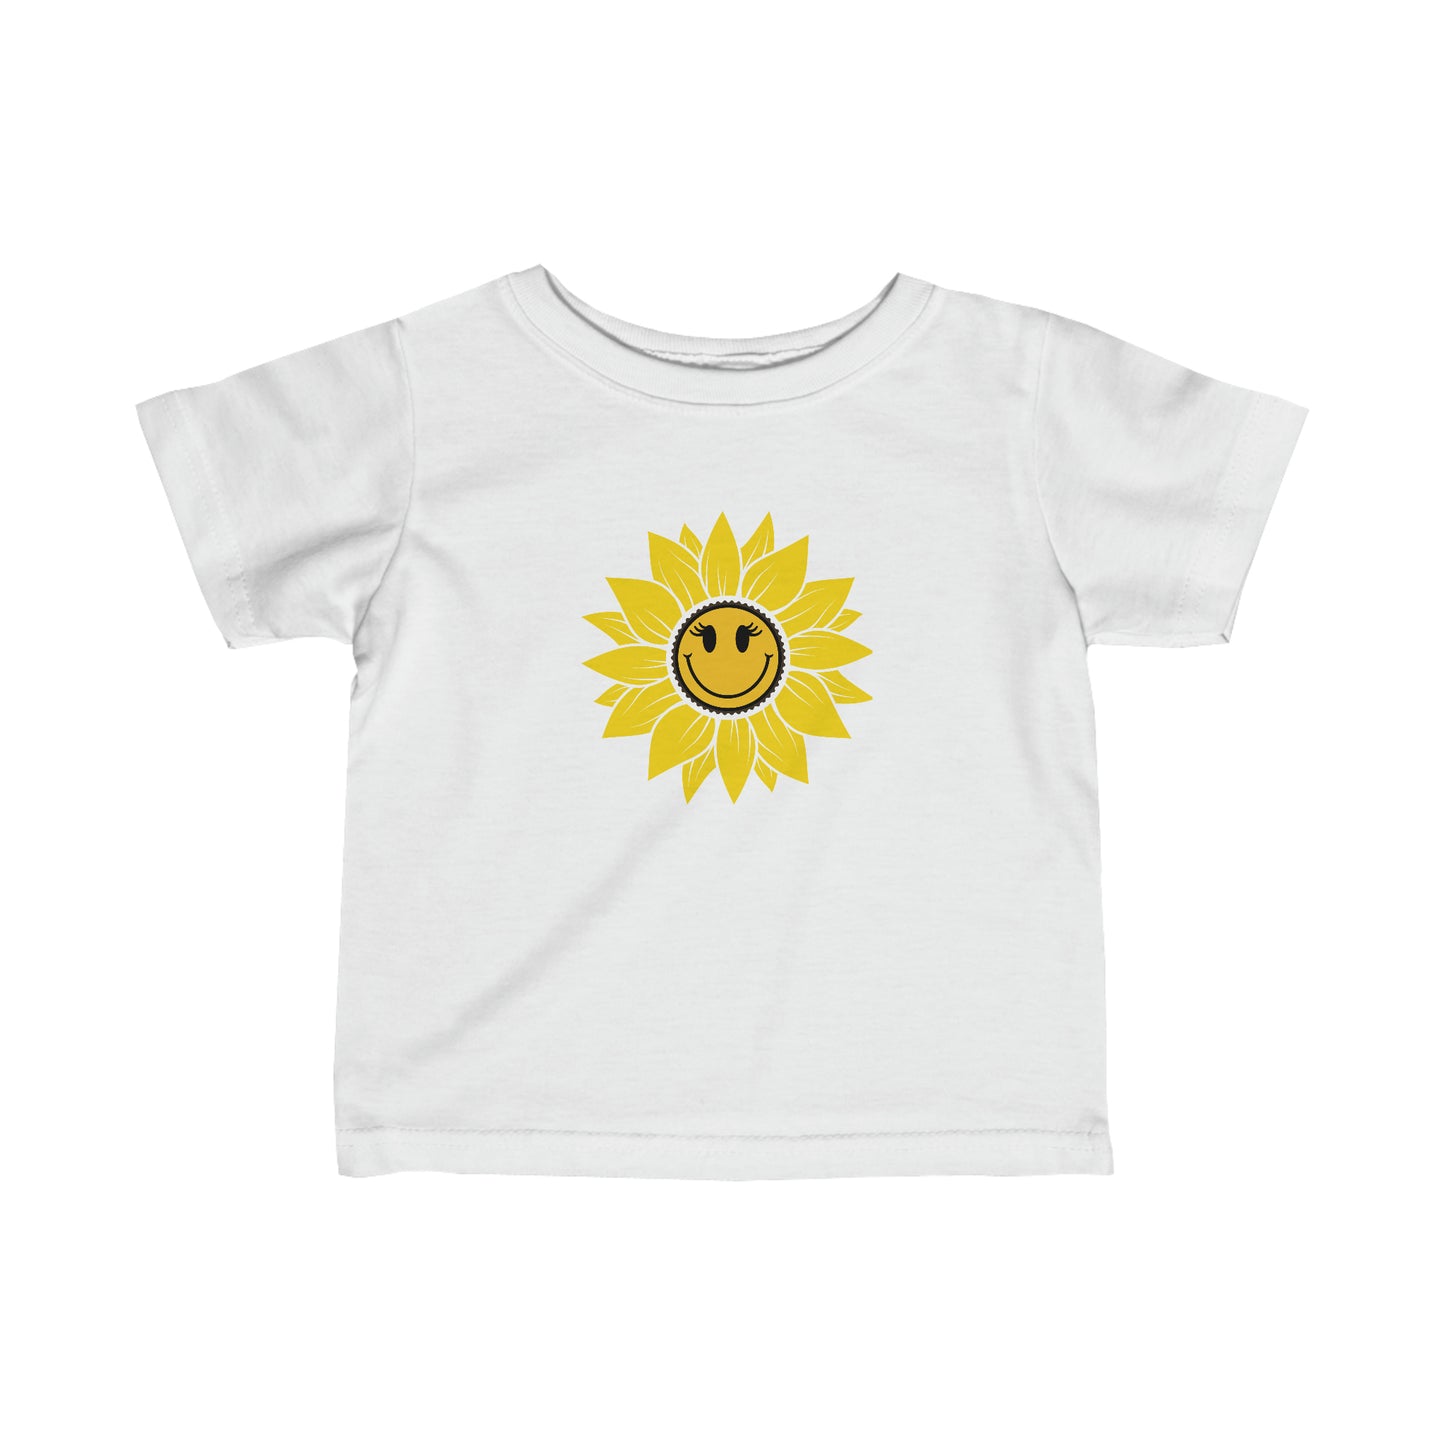 Positive, Sunflower, Nature, Gardens, Flowers, Garden- Baby, Infant, Toddler, T-shirt